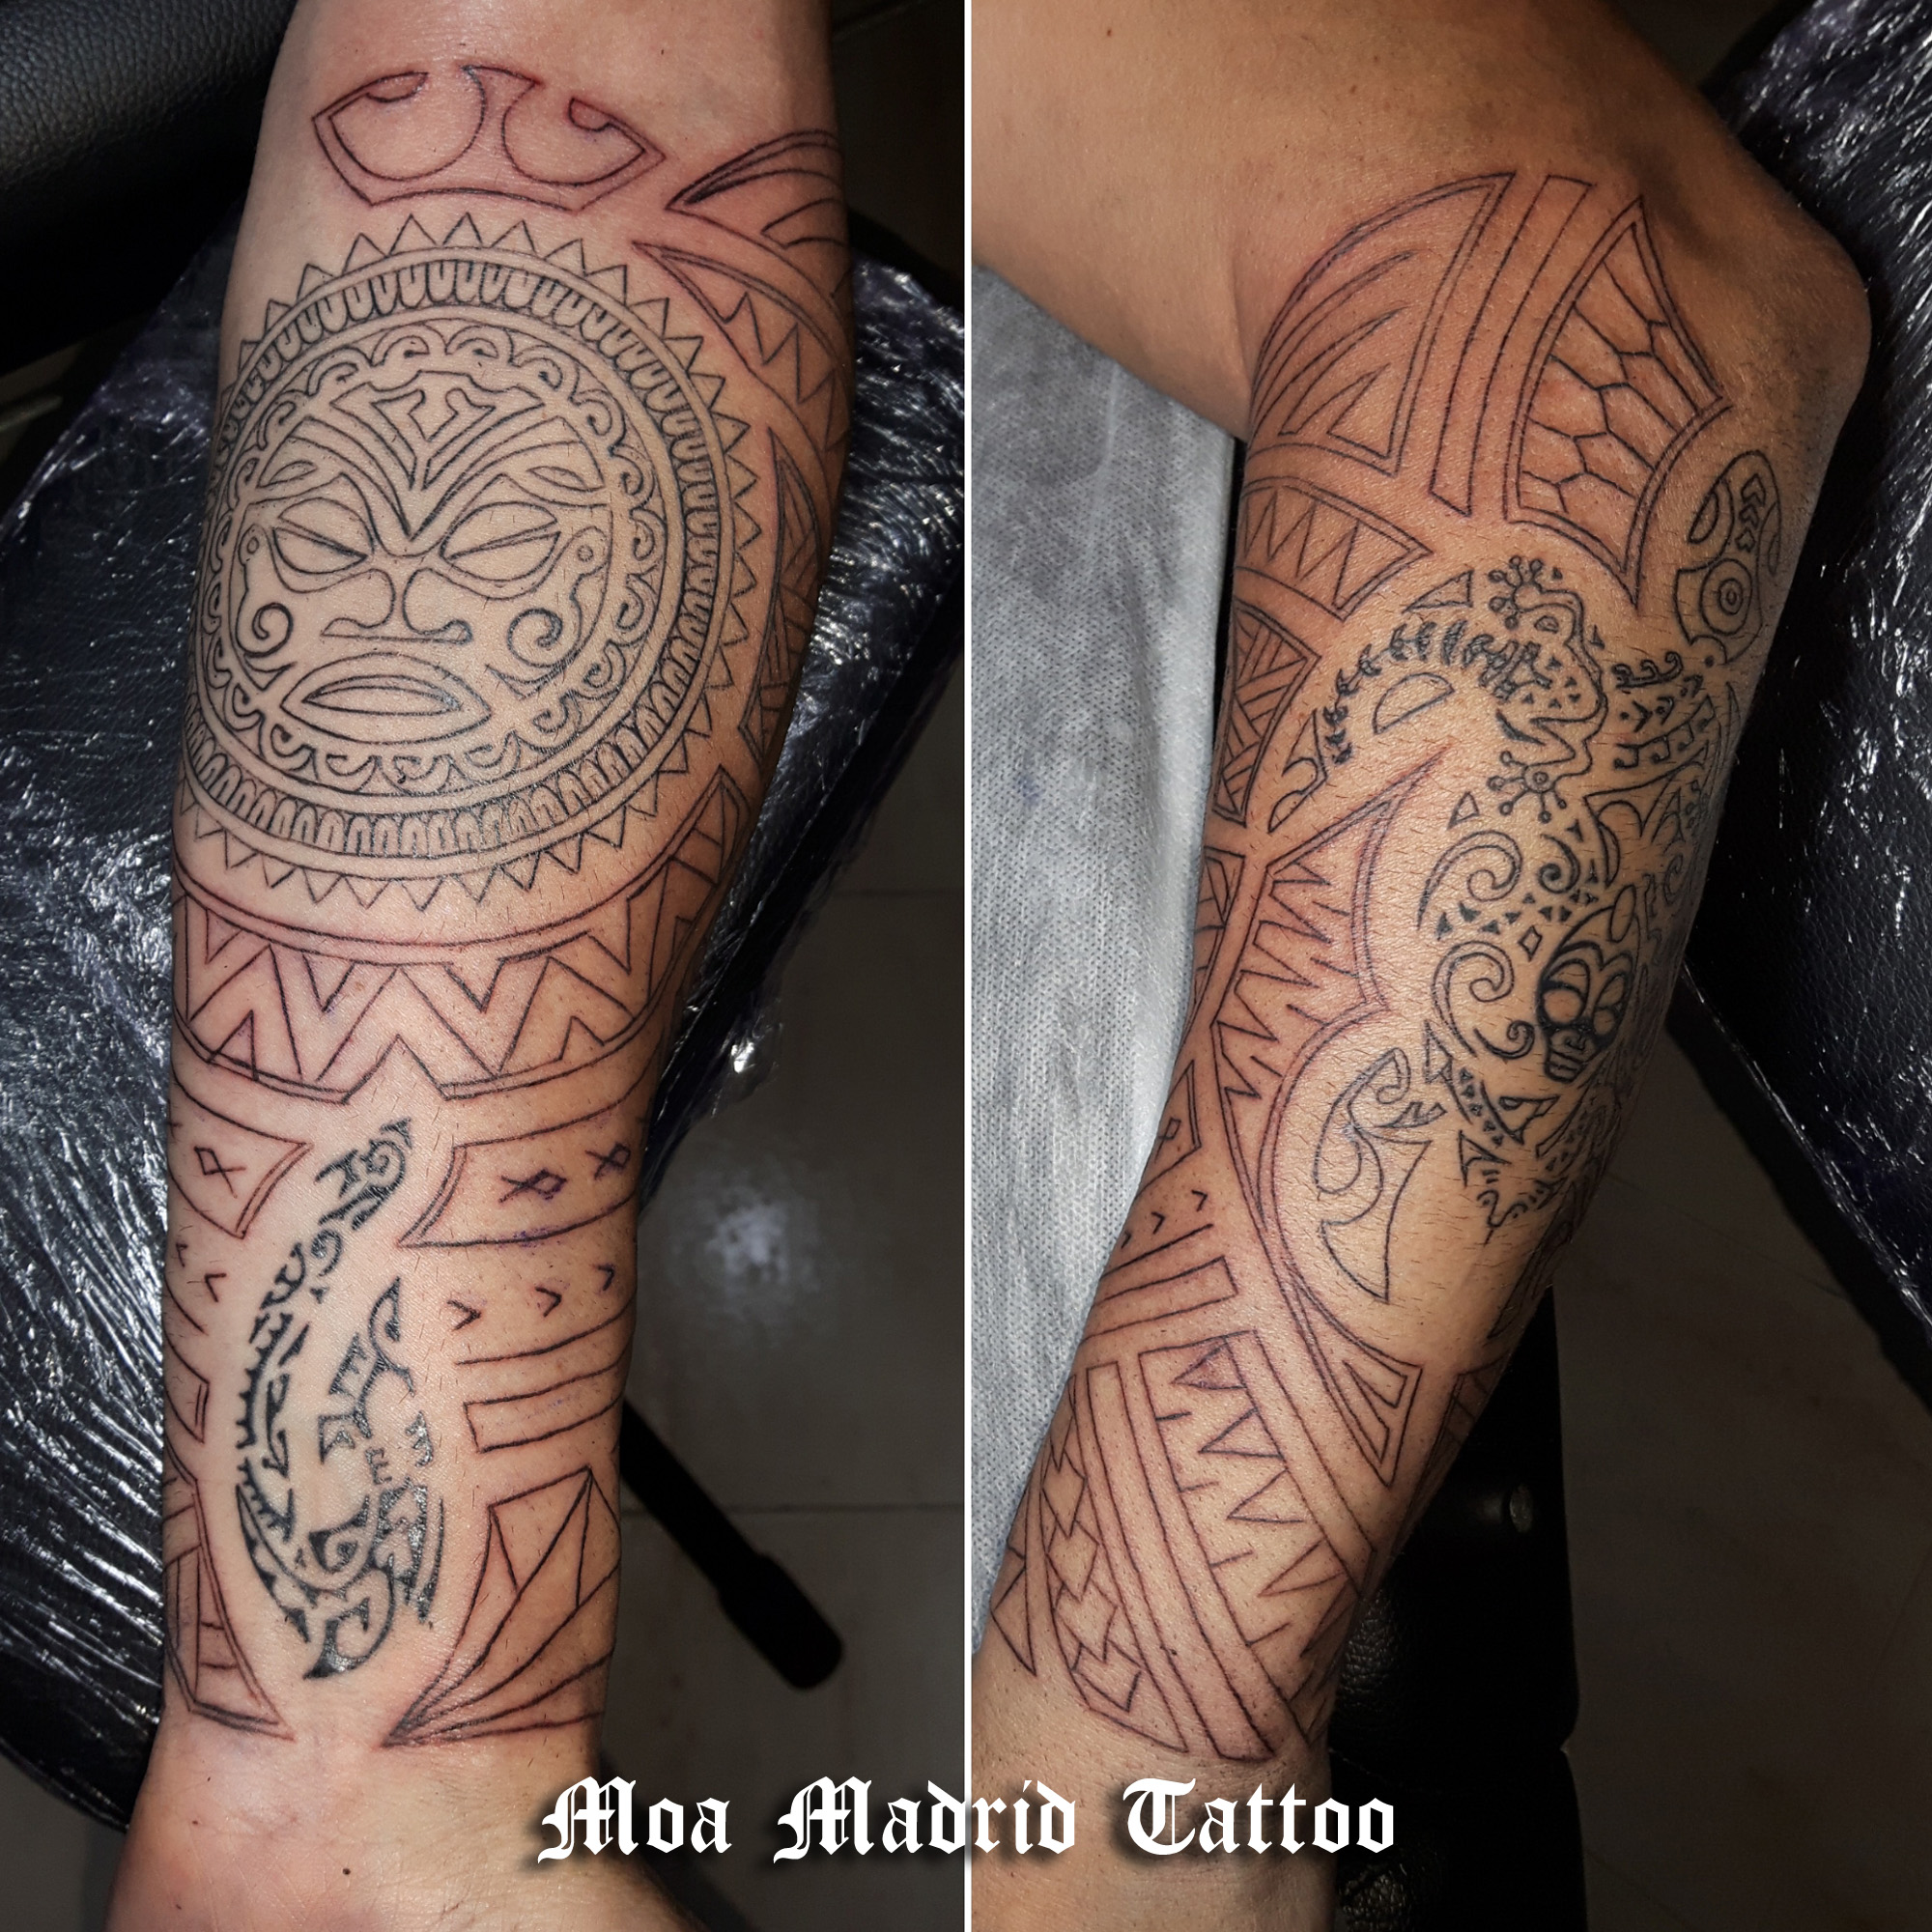 Tatuaje maorí en antebrazo: sesiones de líneas